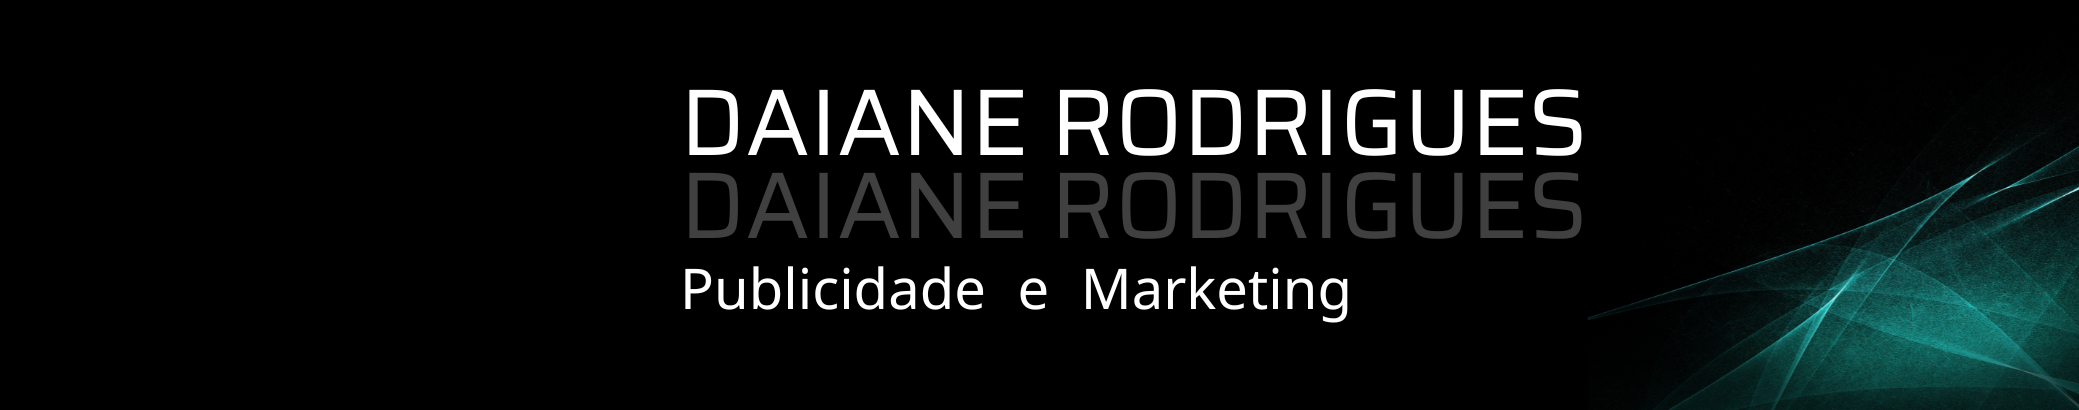 Daiane Rodrigues's profile banner